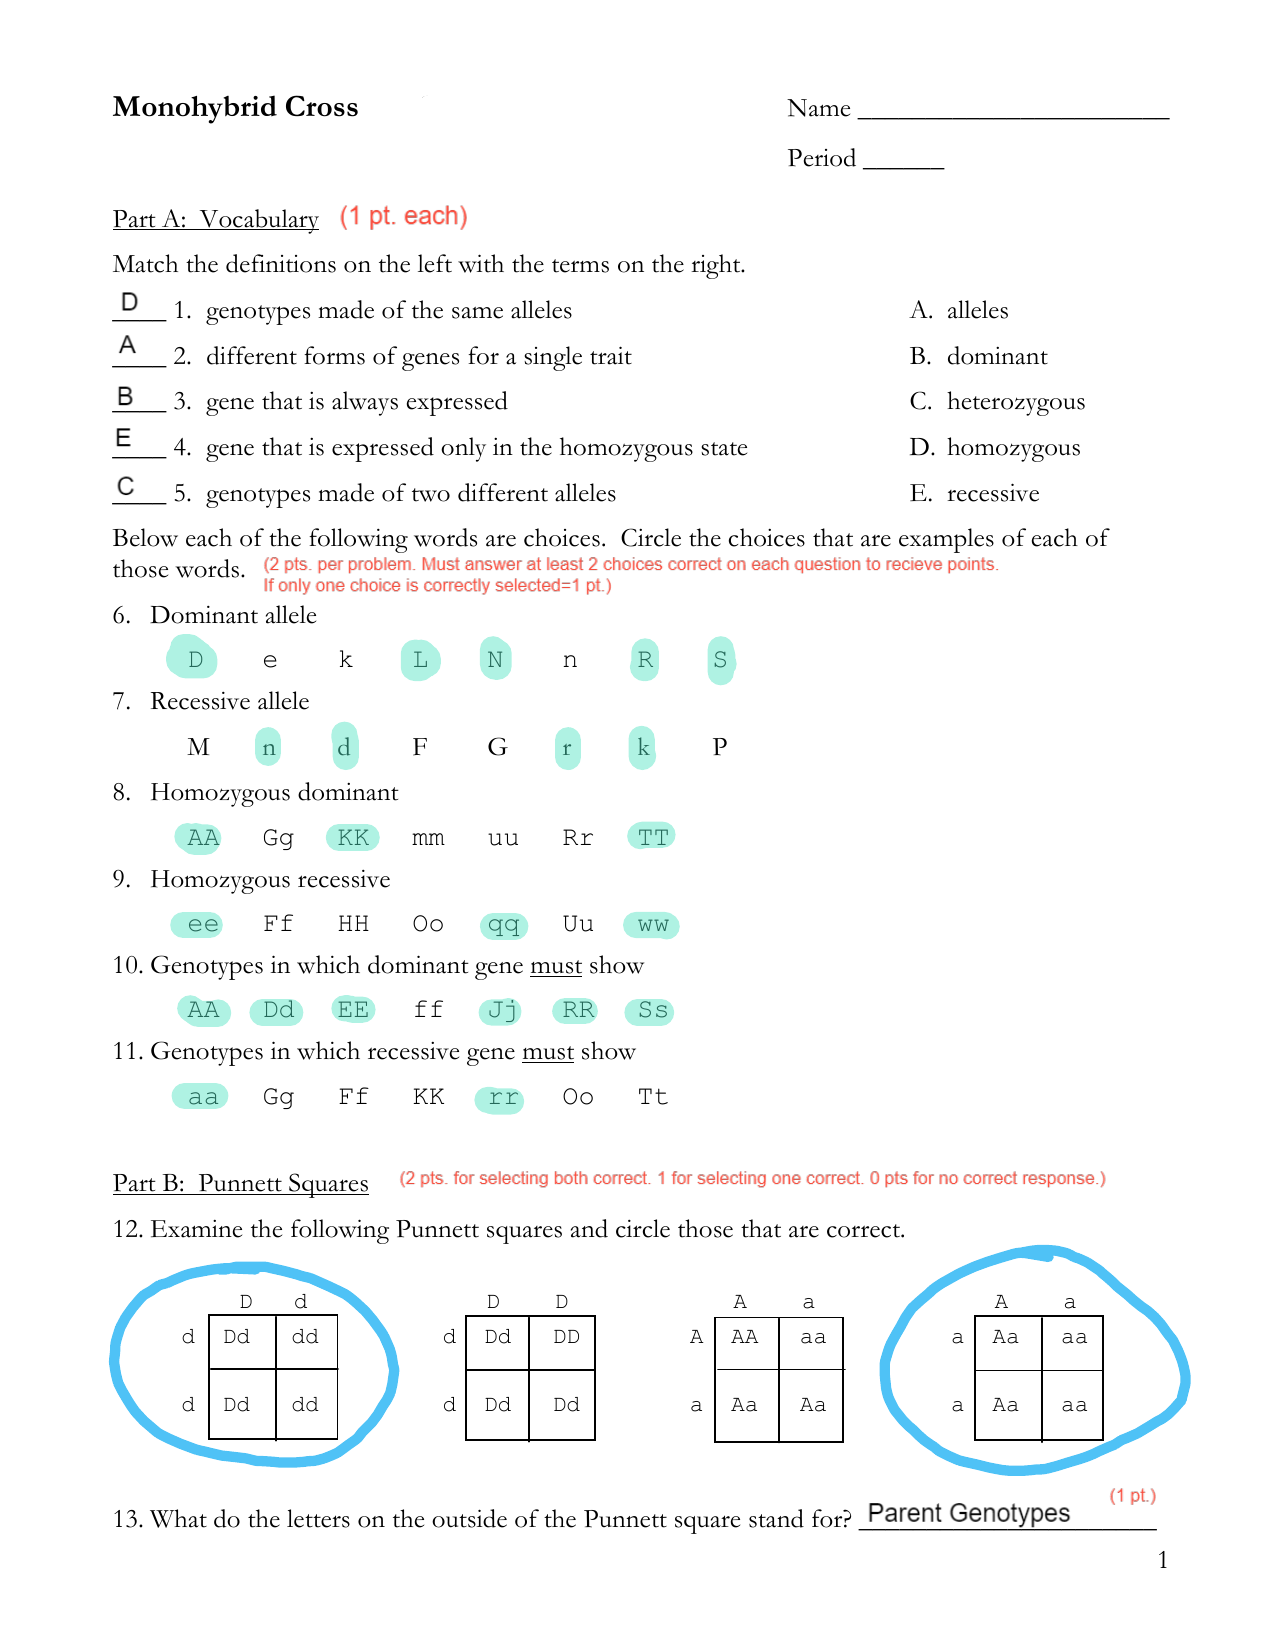 Monohybrid Cross Activity Sheet (Key) Regarding Monohybrid Crosses Worksheet Answers